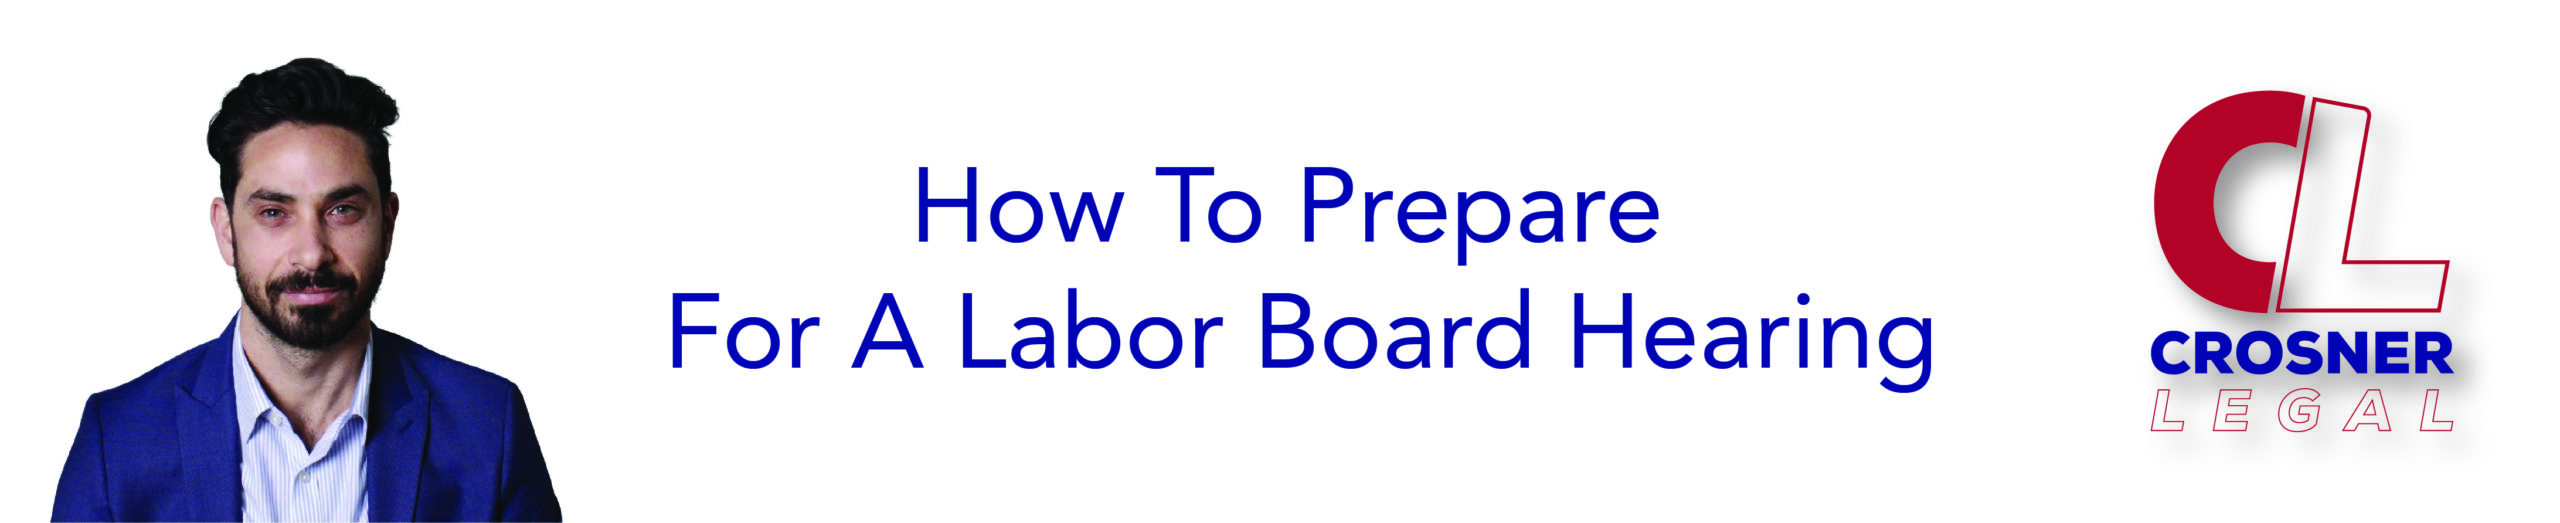 How To Prepare For A Labor Board Hearing